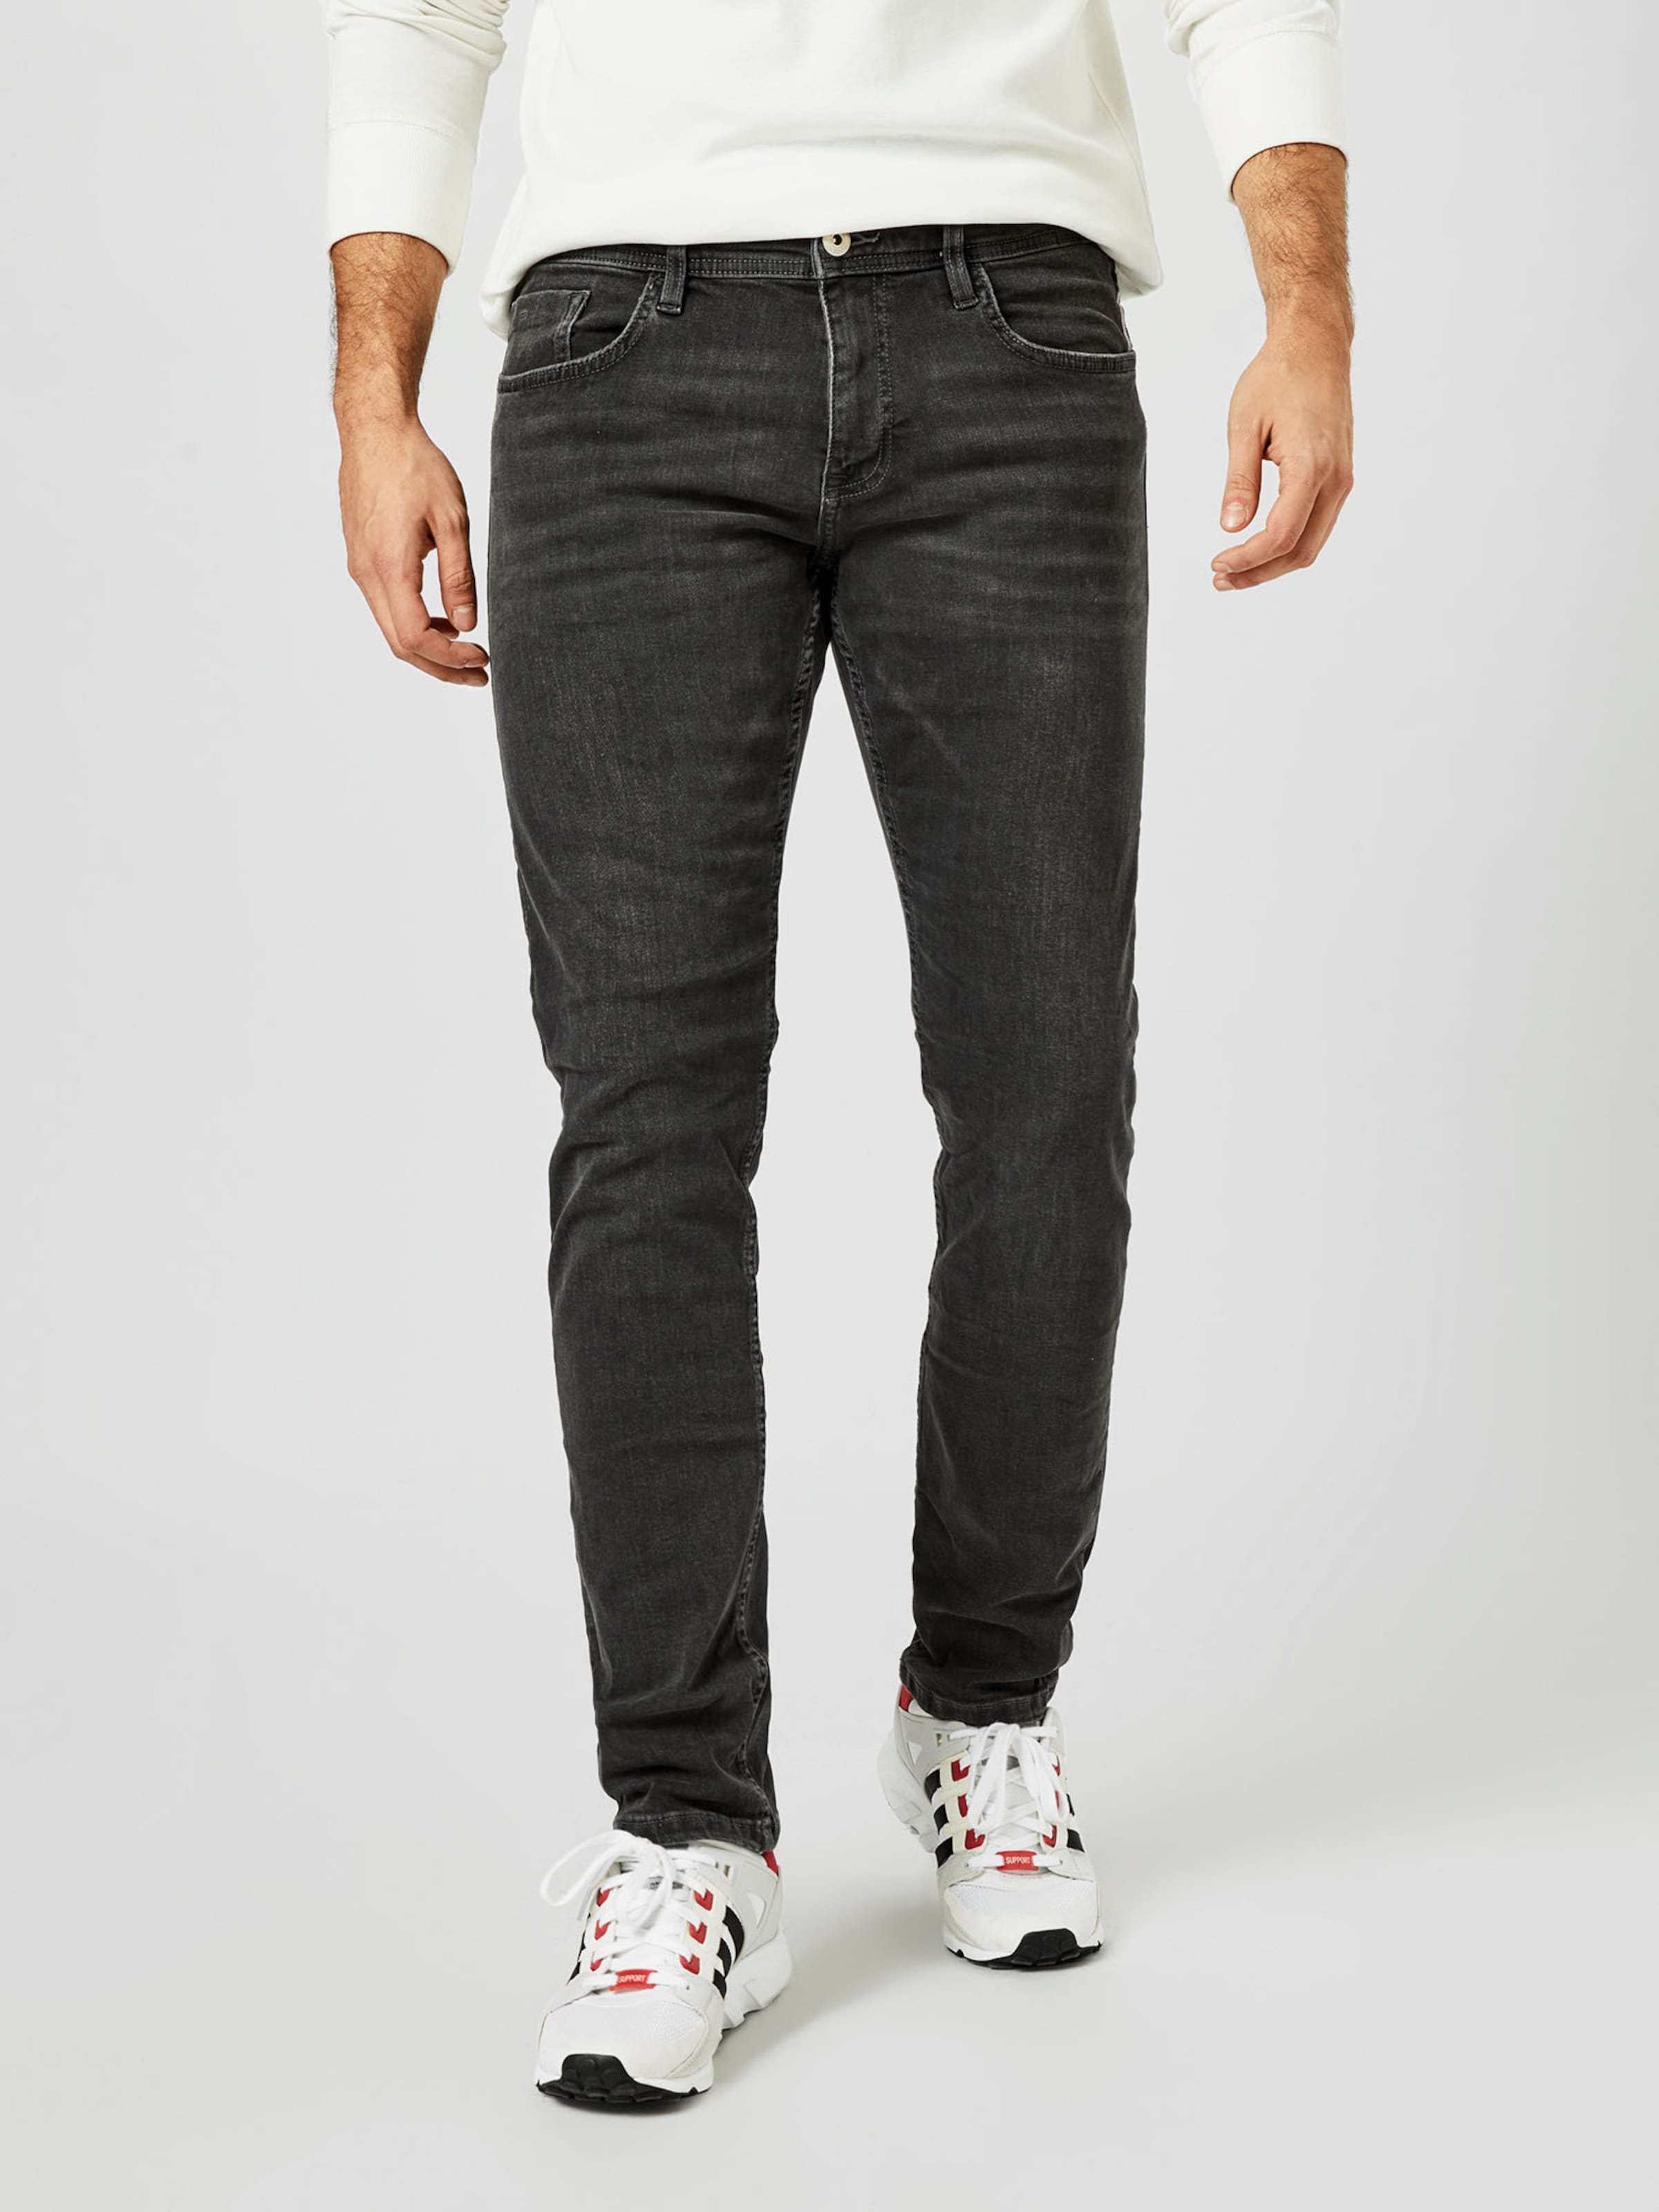 Esprit EDC Herren Jeans Grau Slim Fit Größe 32 34 